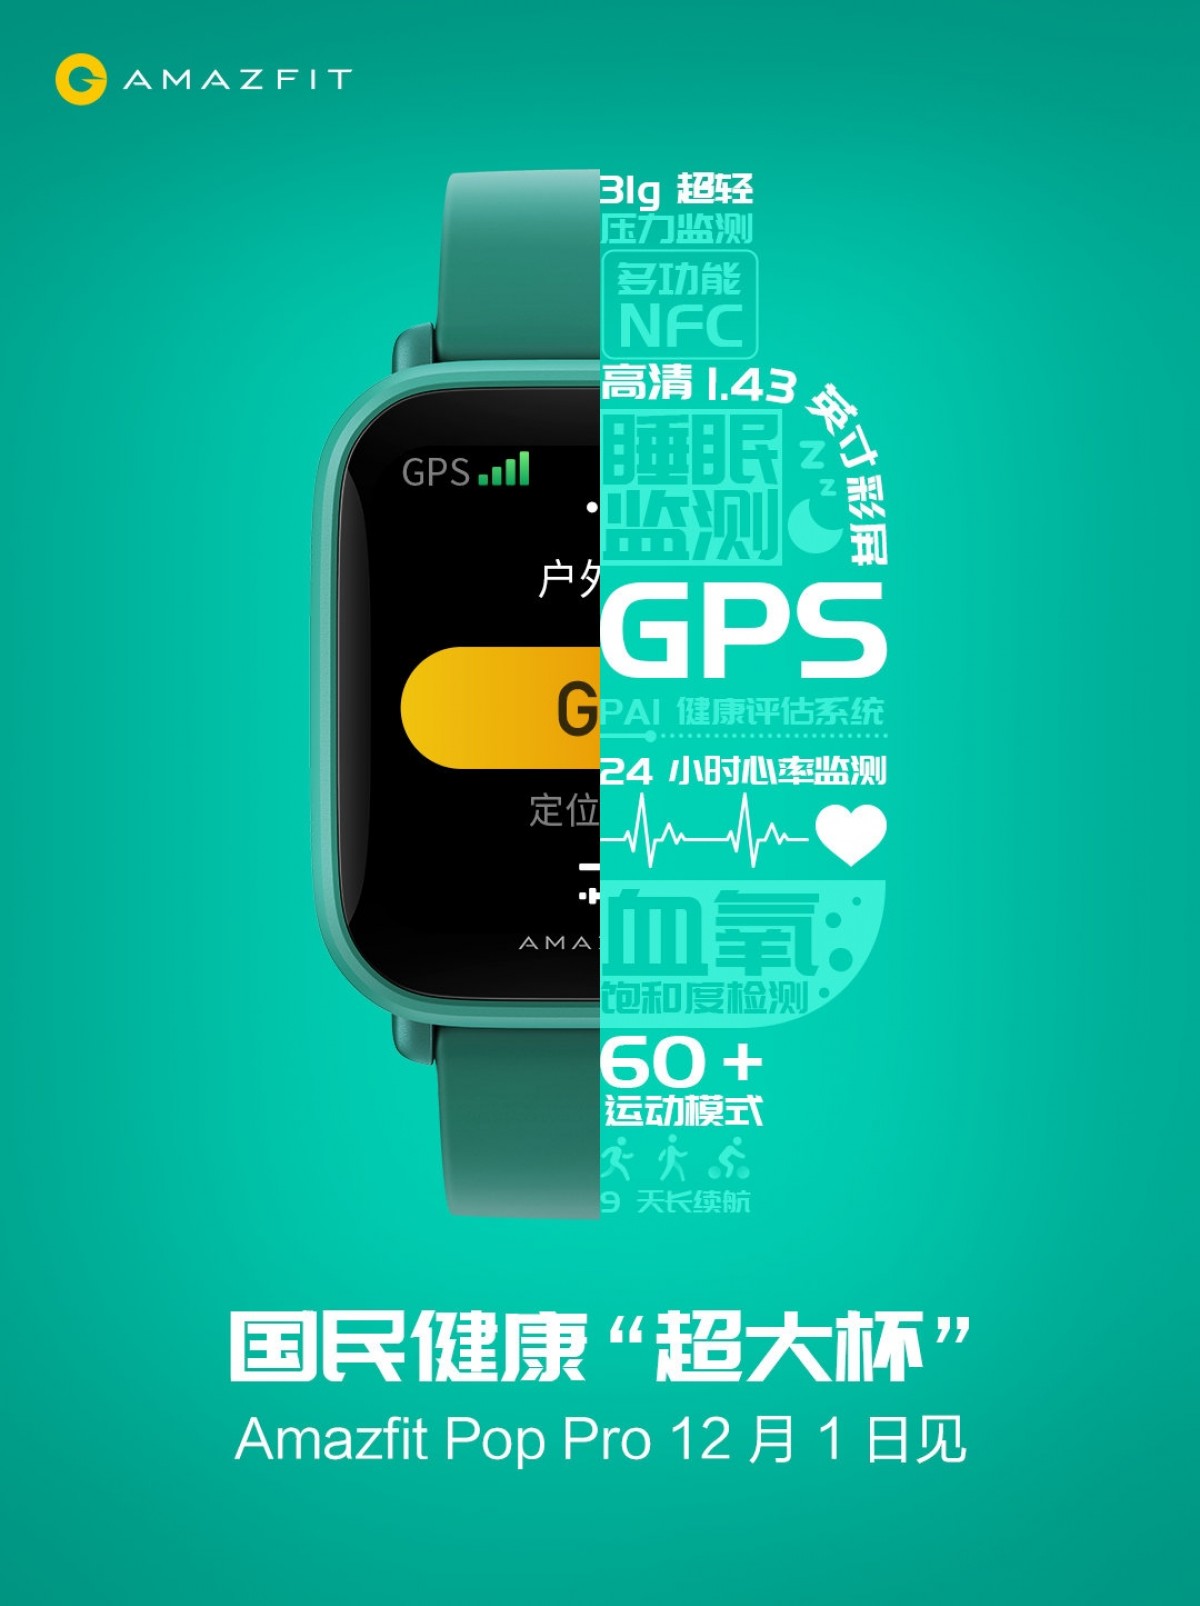 Amazfit Pop Pro Smartwatch is Coming Next Week